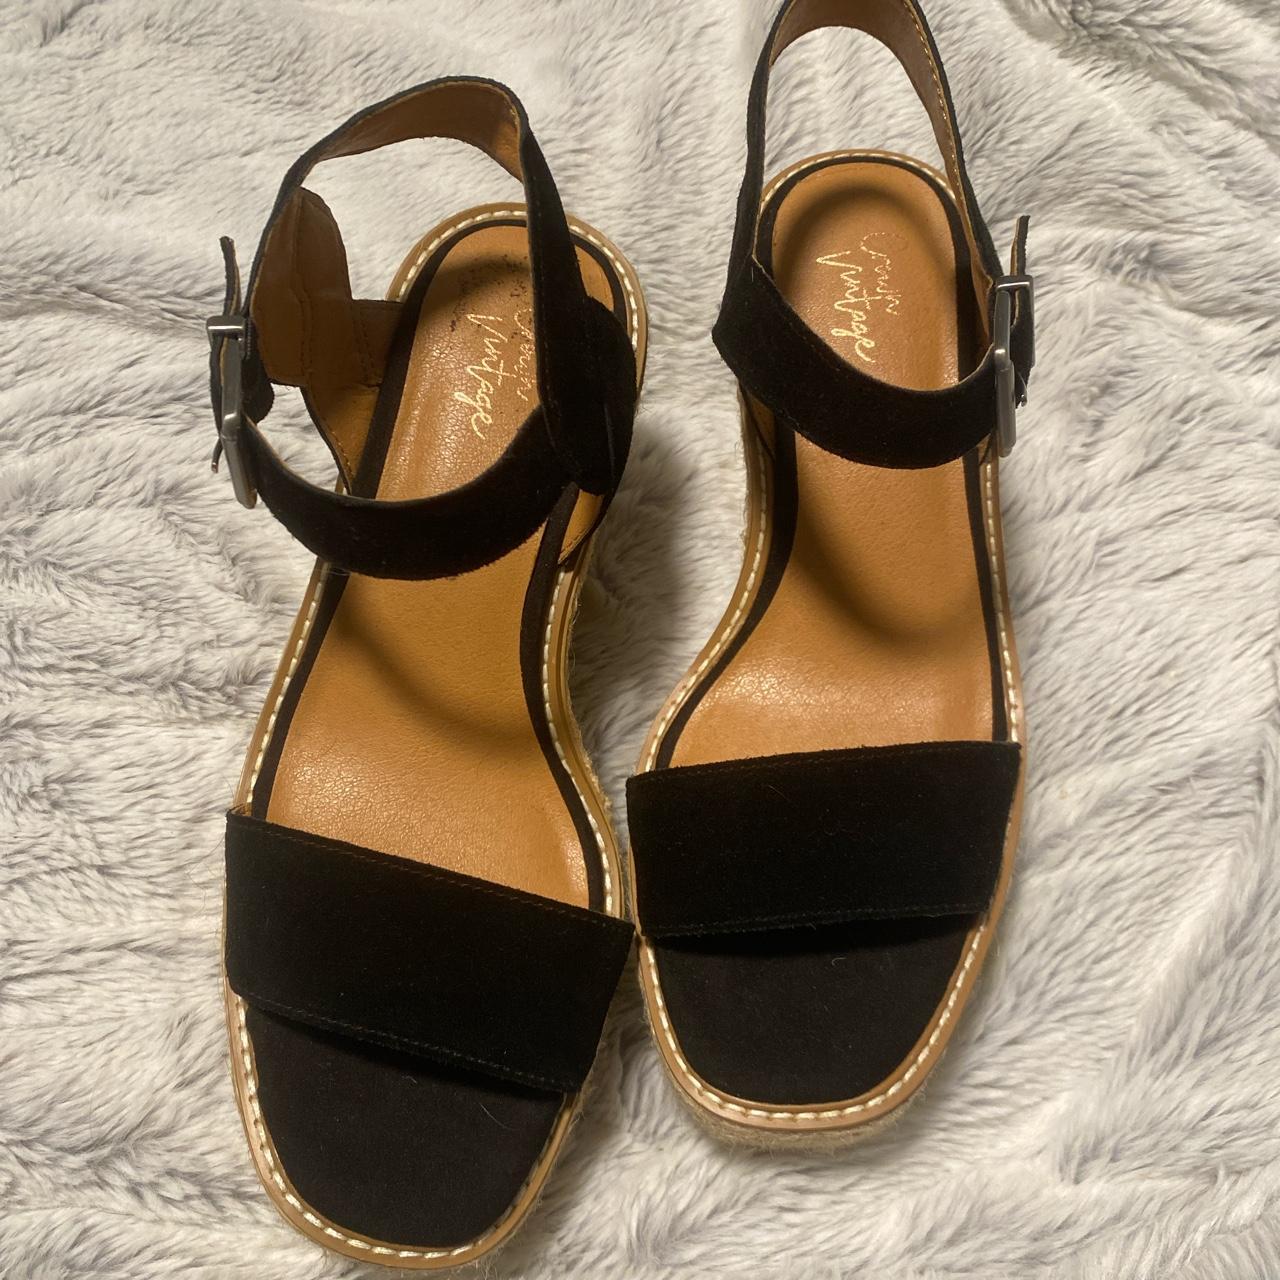 Crown vintage sandals - super comfortable - size 8.5... - Depop